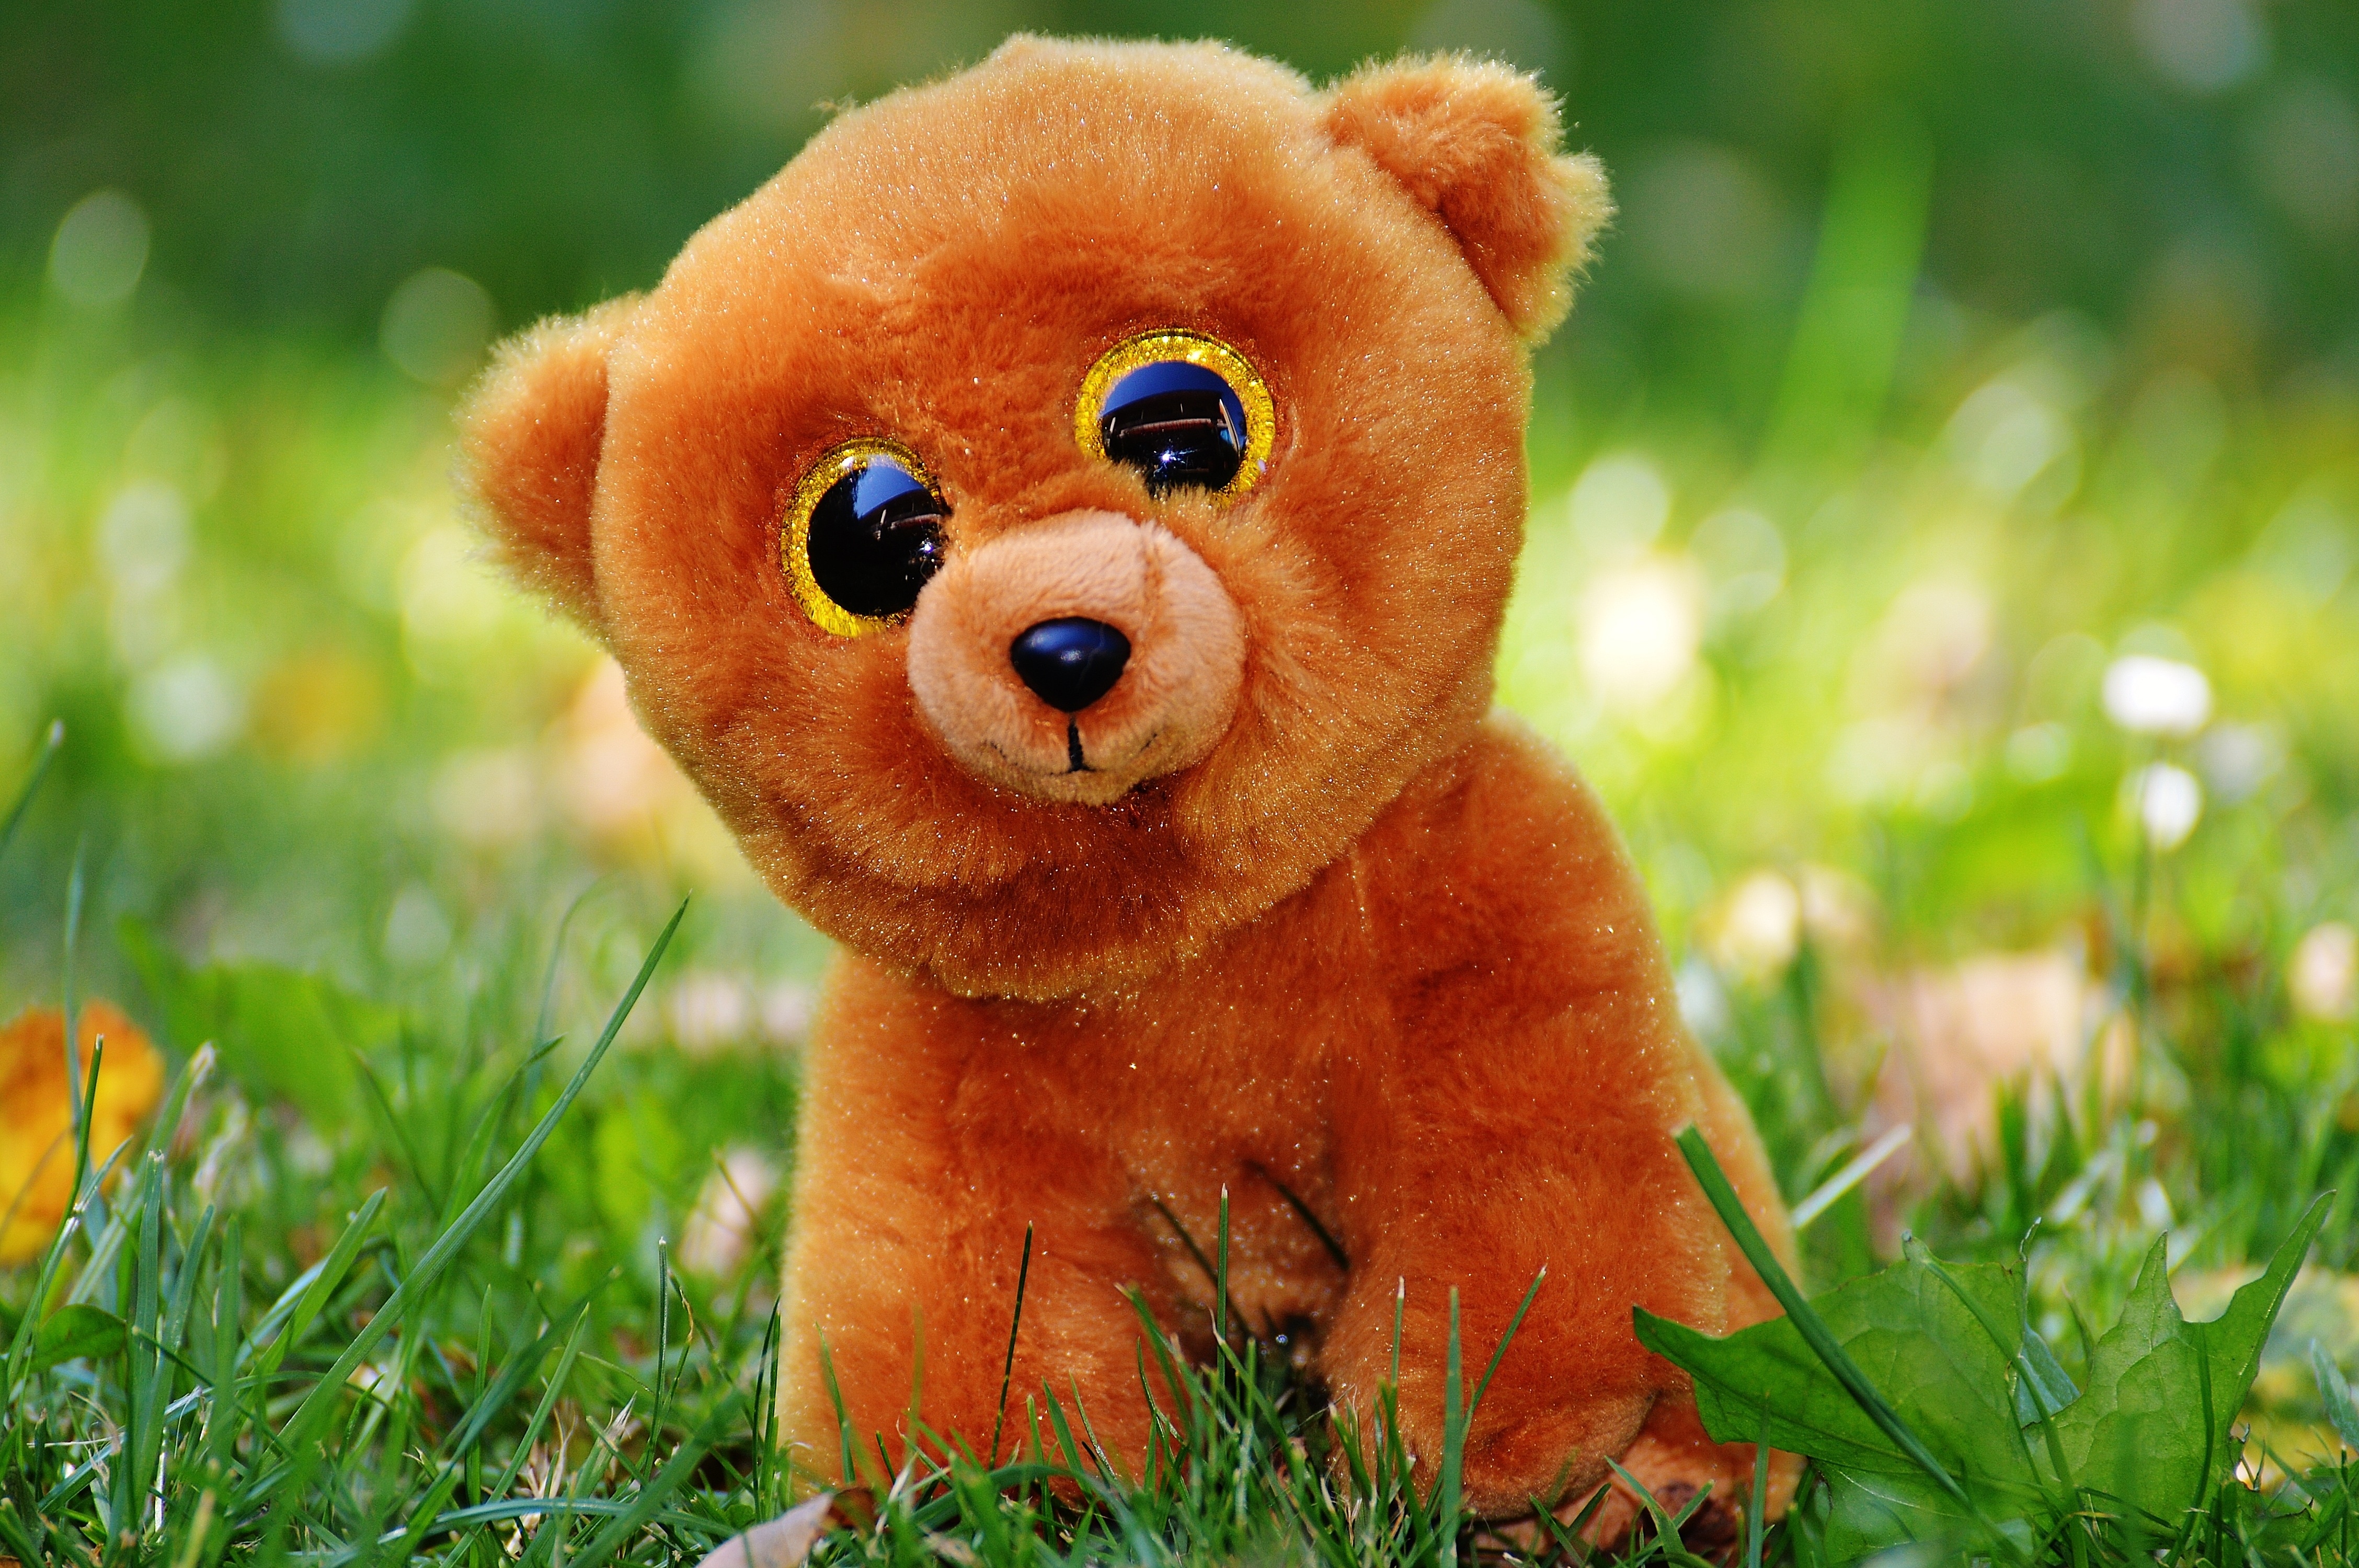 brown bear plush toy